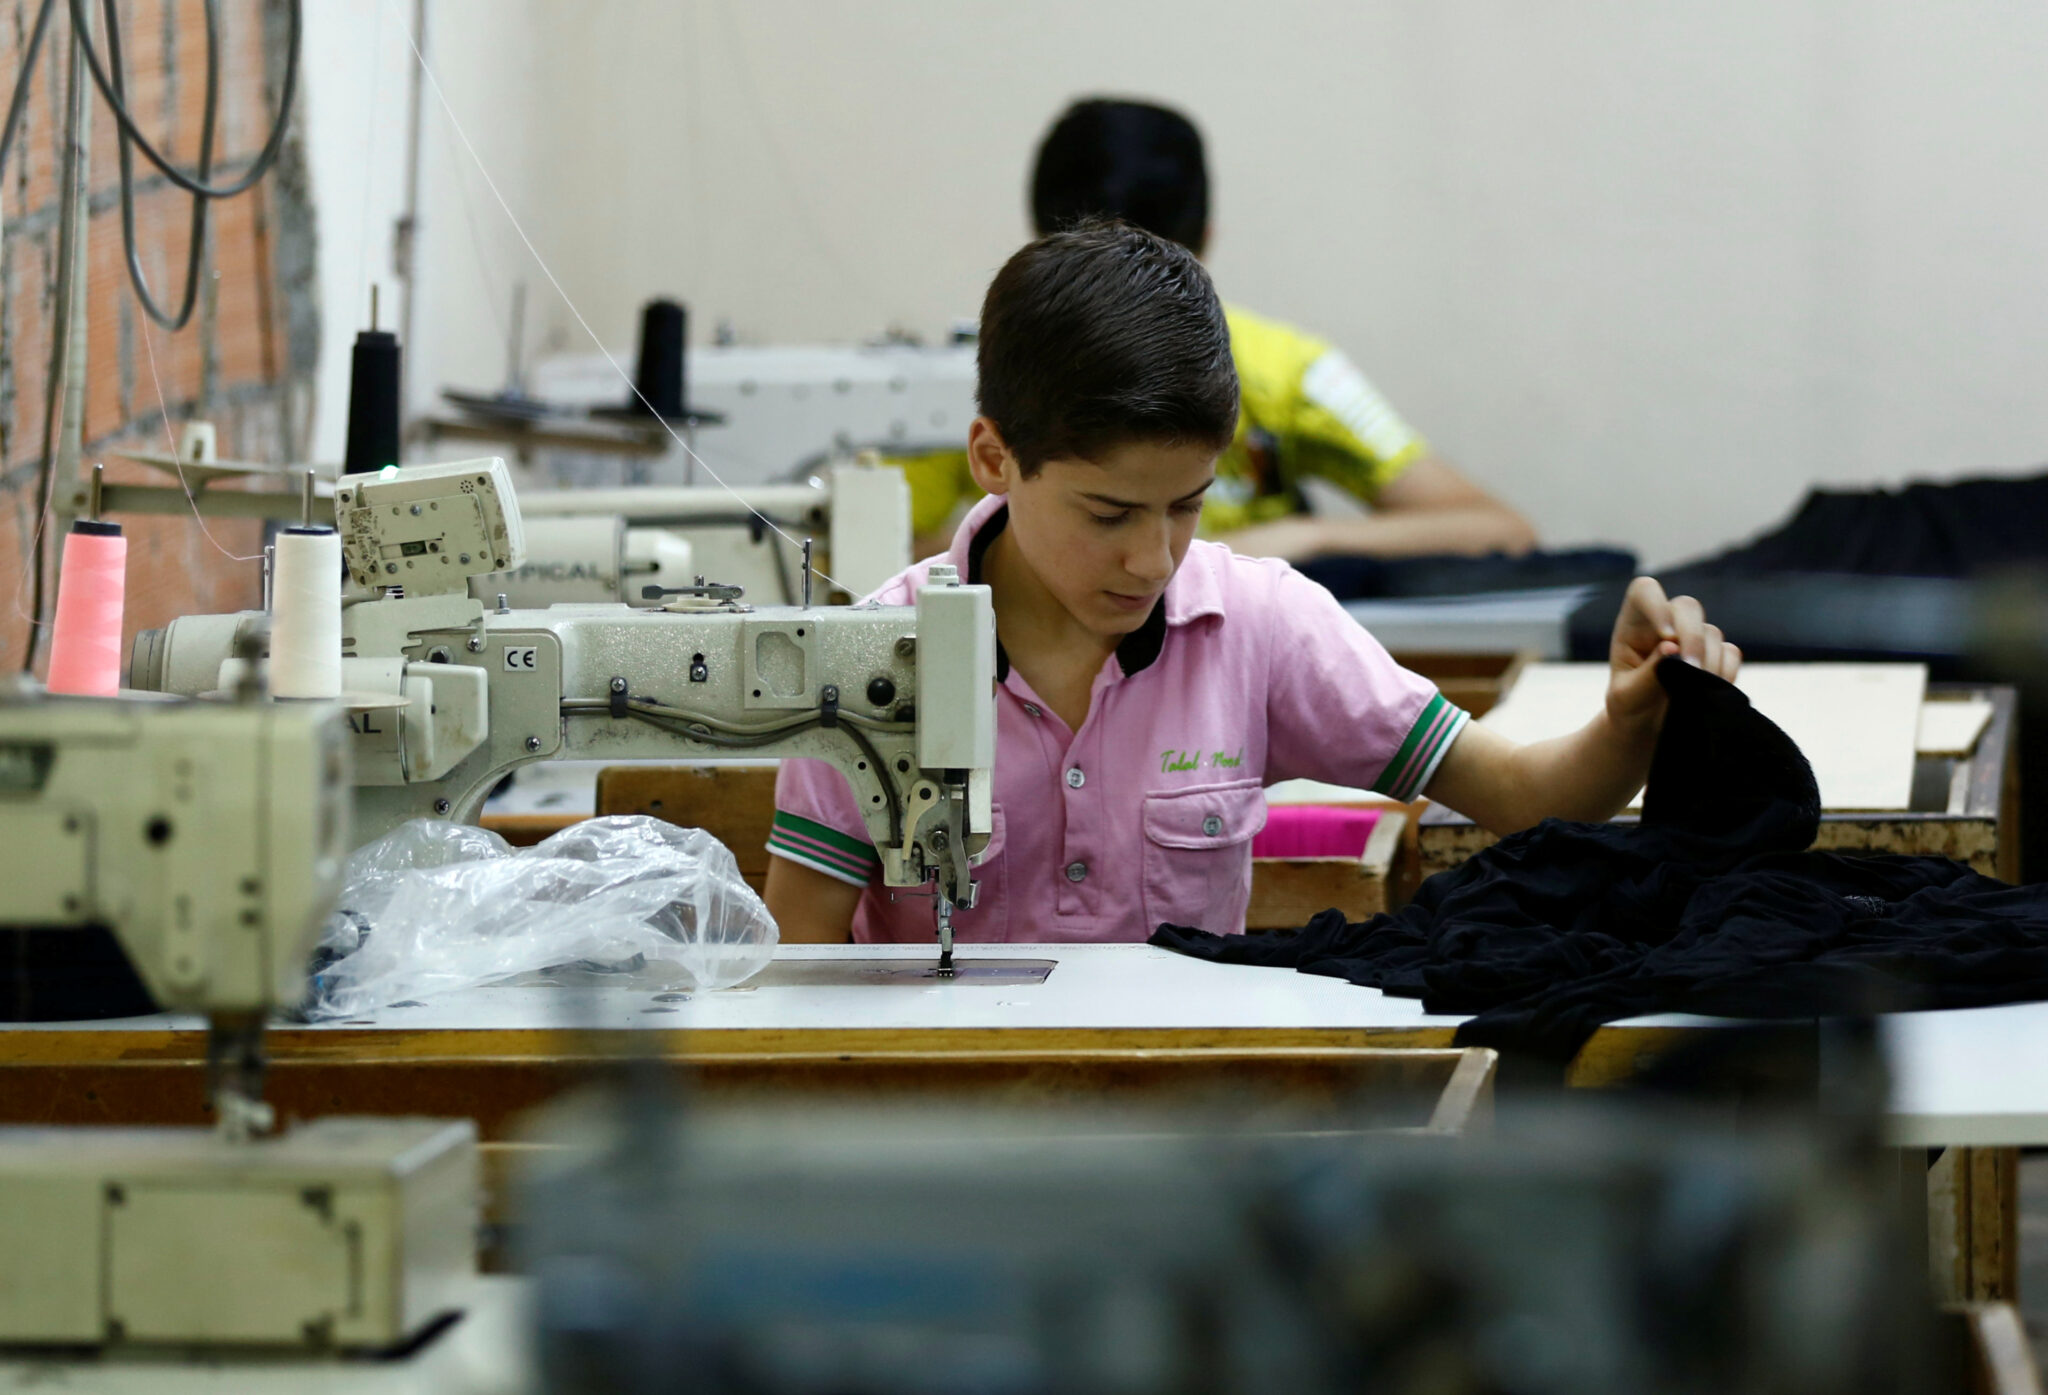 A Syrian worker in a sewing workshop in the Zeytinburnu neighborhood in Istanbul - 15 May 2019 (Reuters)